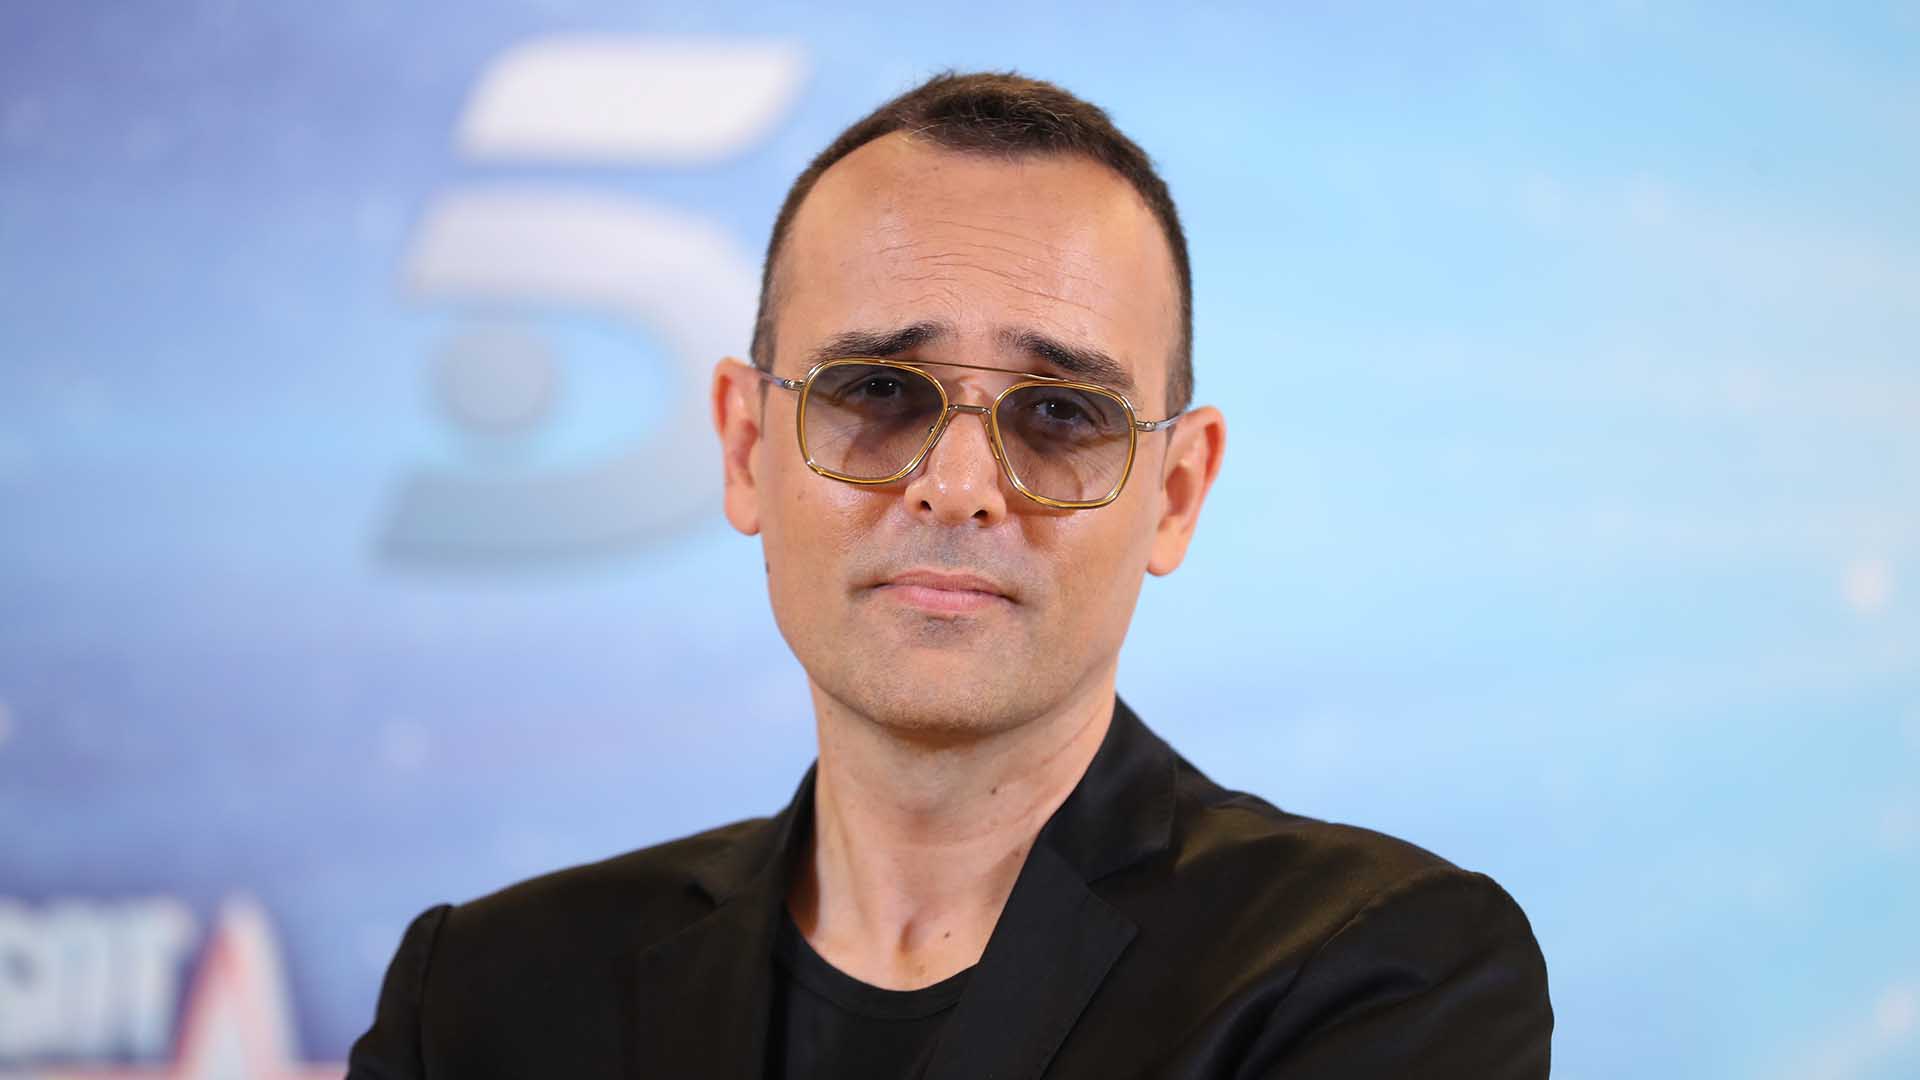 Risto Mejide during presentation tv show Got Talent in Madrid on Wednesday, 18 September 2019.